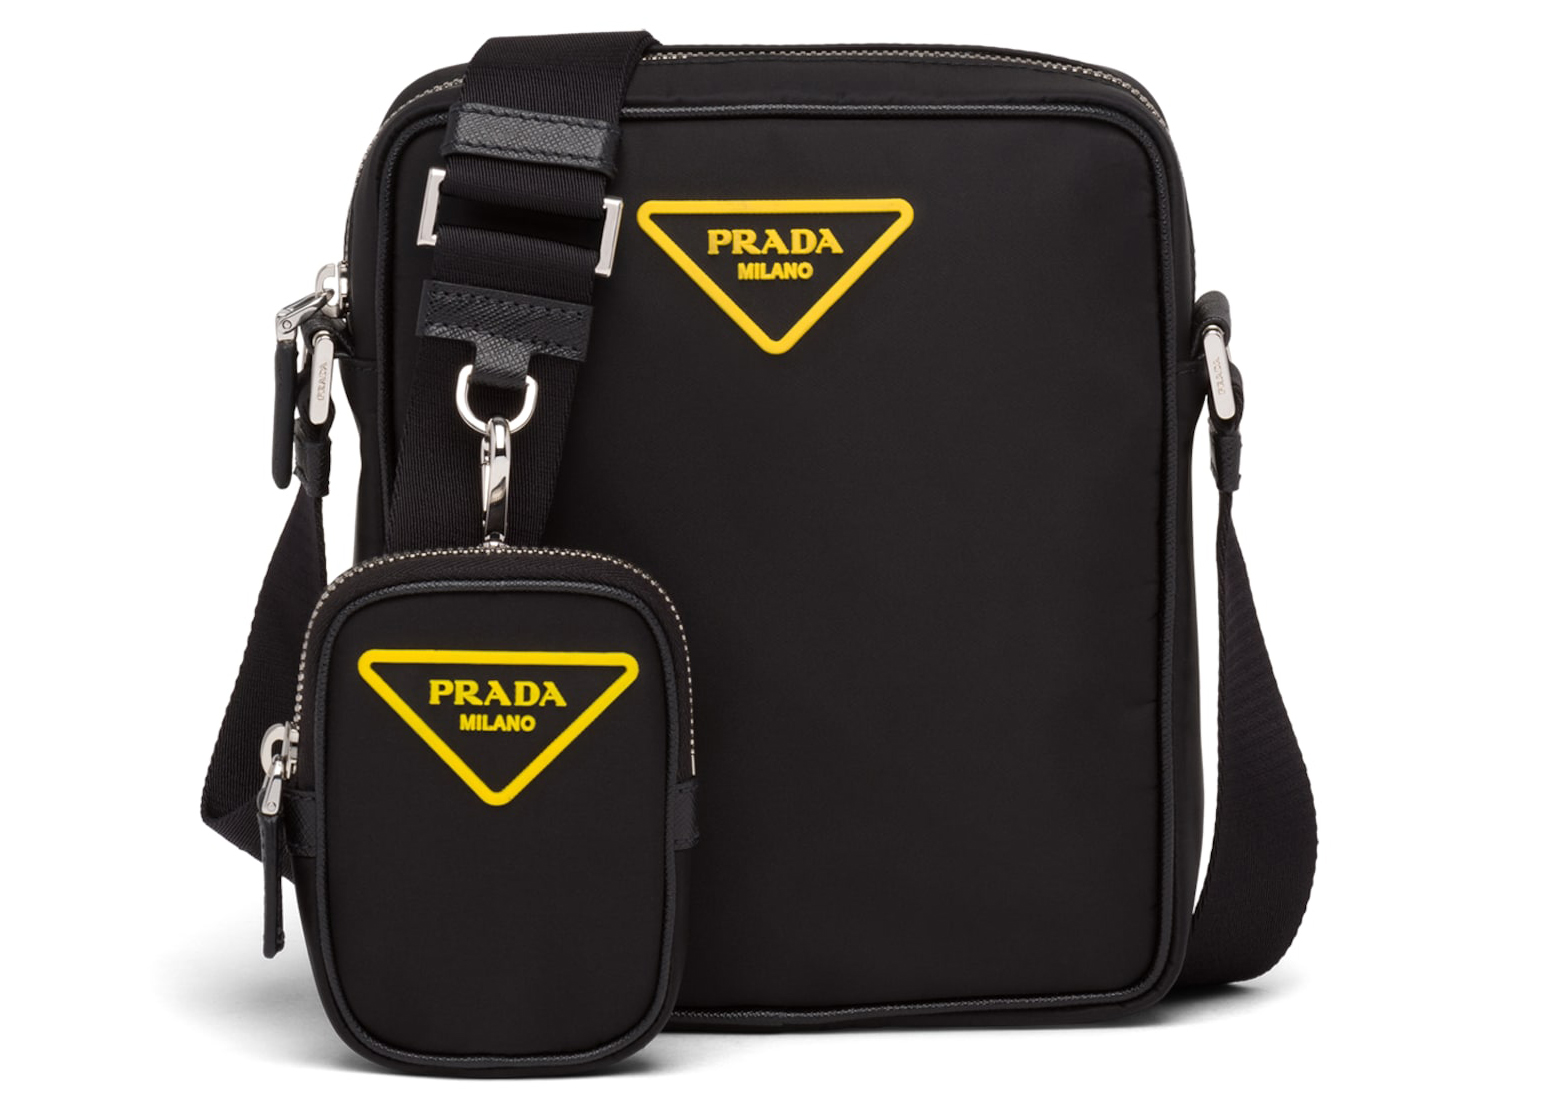 Prada Multi Cross Body Bag essentials aotd  Crossbody bag outfit Prada  crossbody bag Stylish school bags